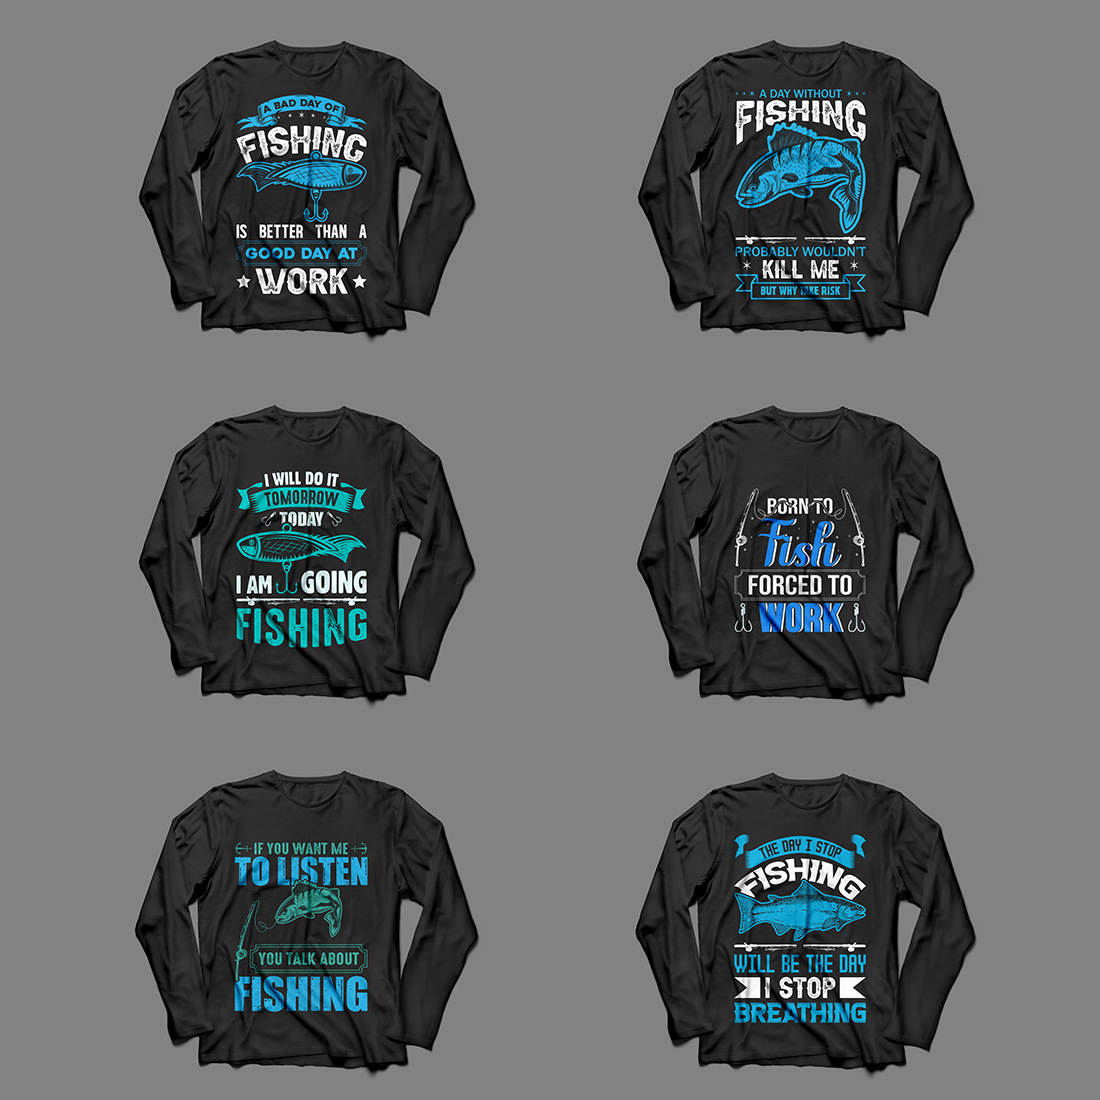 6 fishing t shirt design bundle - Fishing t shirt designs preview image.